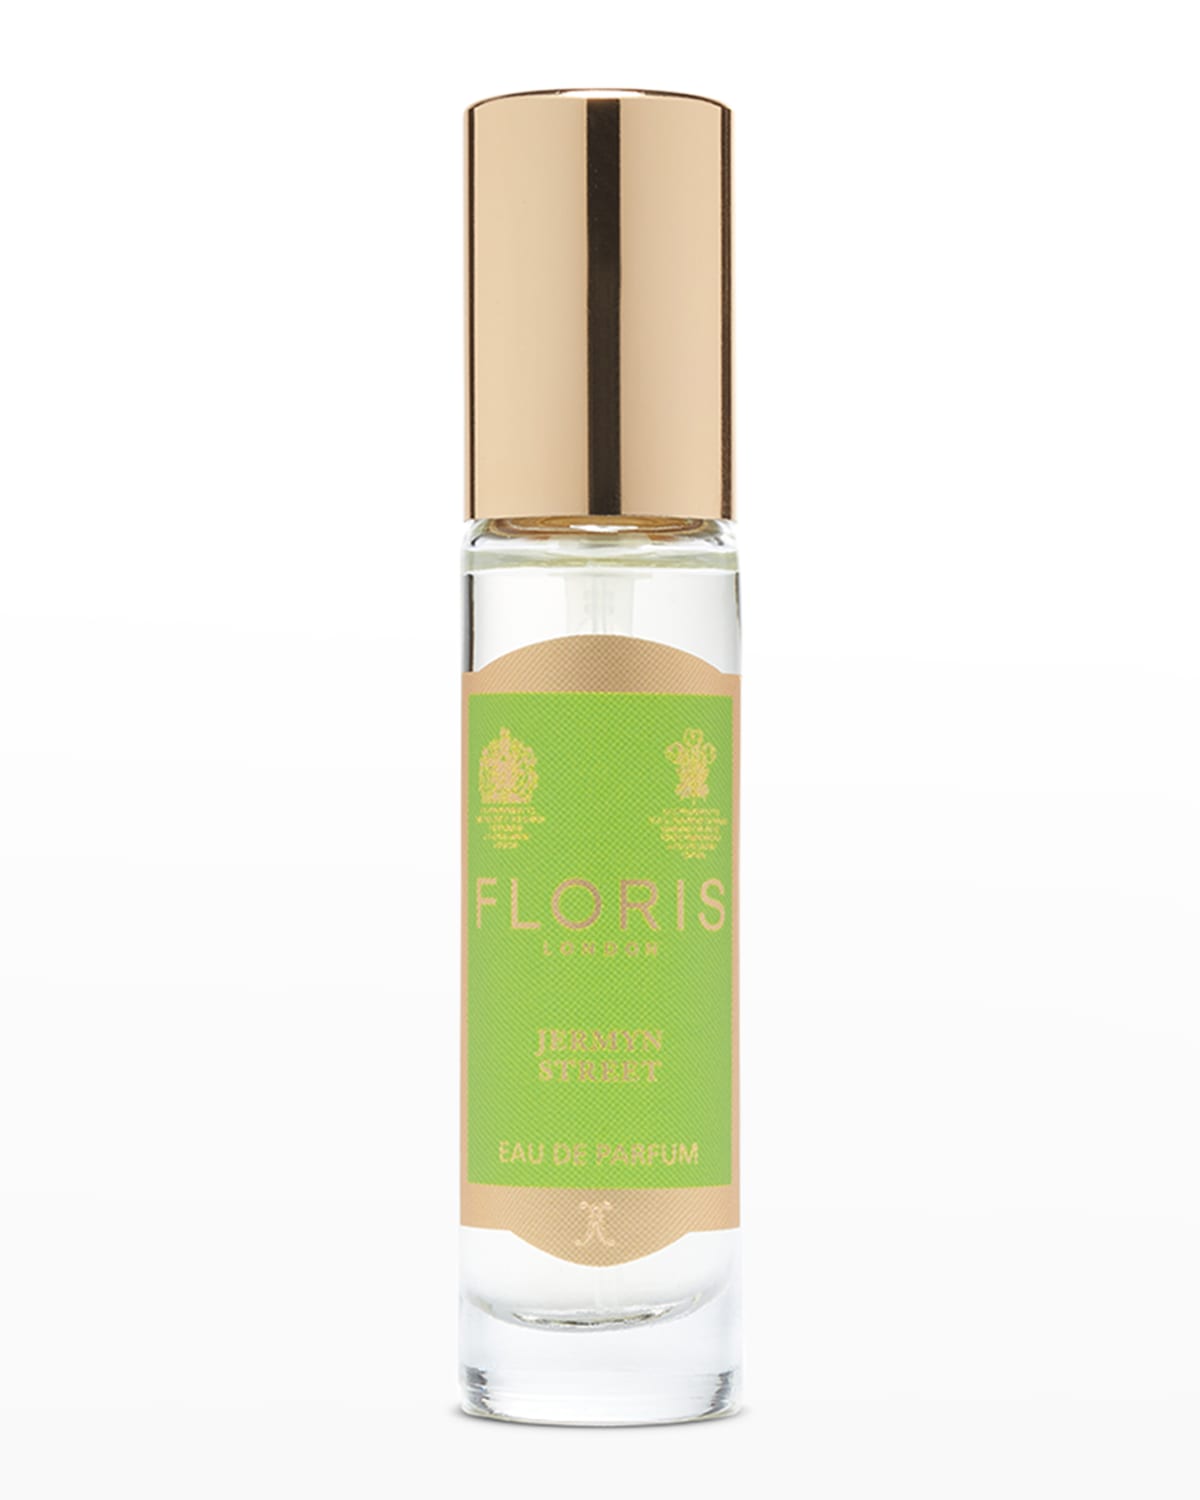 Floris London Jermyn Street Eau de Parfum, 0.33 oz.